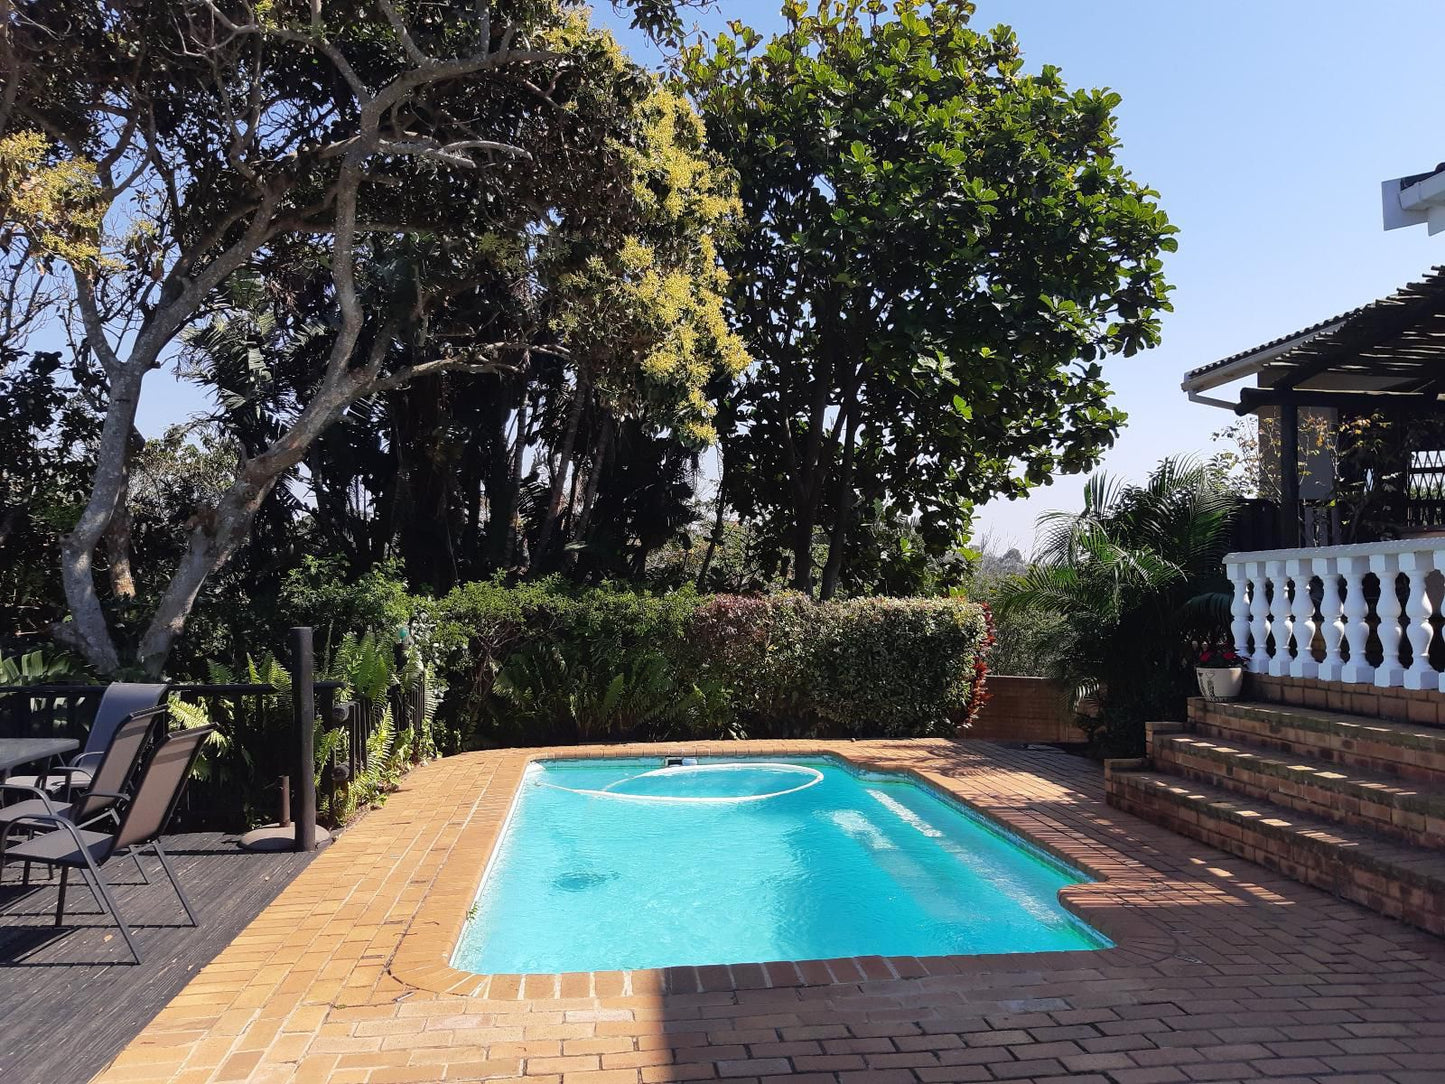 Zuider Zee Guest House Salt Rock Ballito Kwazulu Natal South Africa Palm Tree, Plant, Nature, Wood, Garden, Swimming Pool